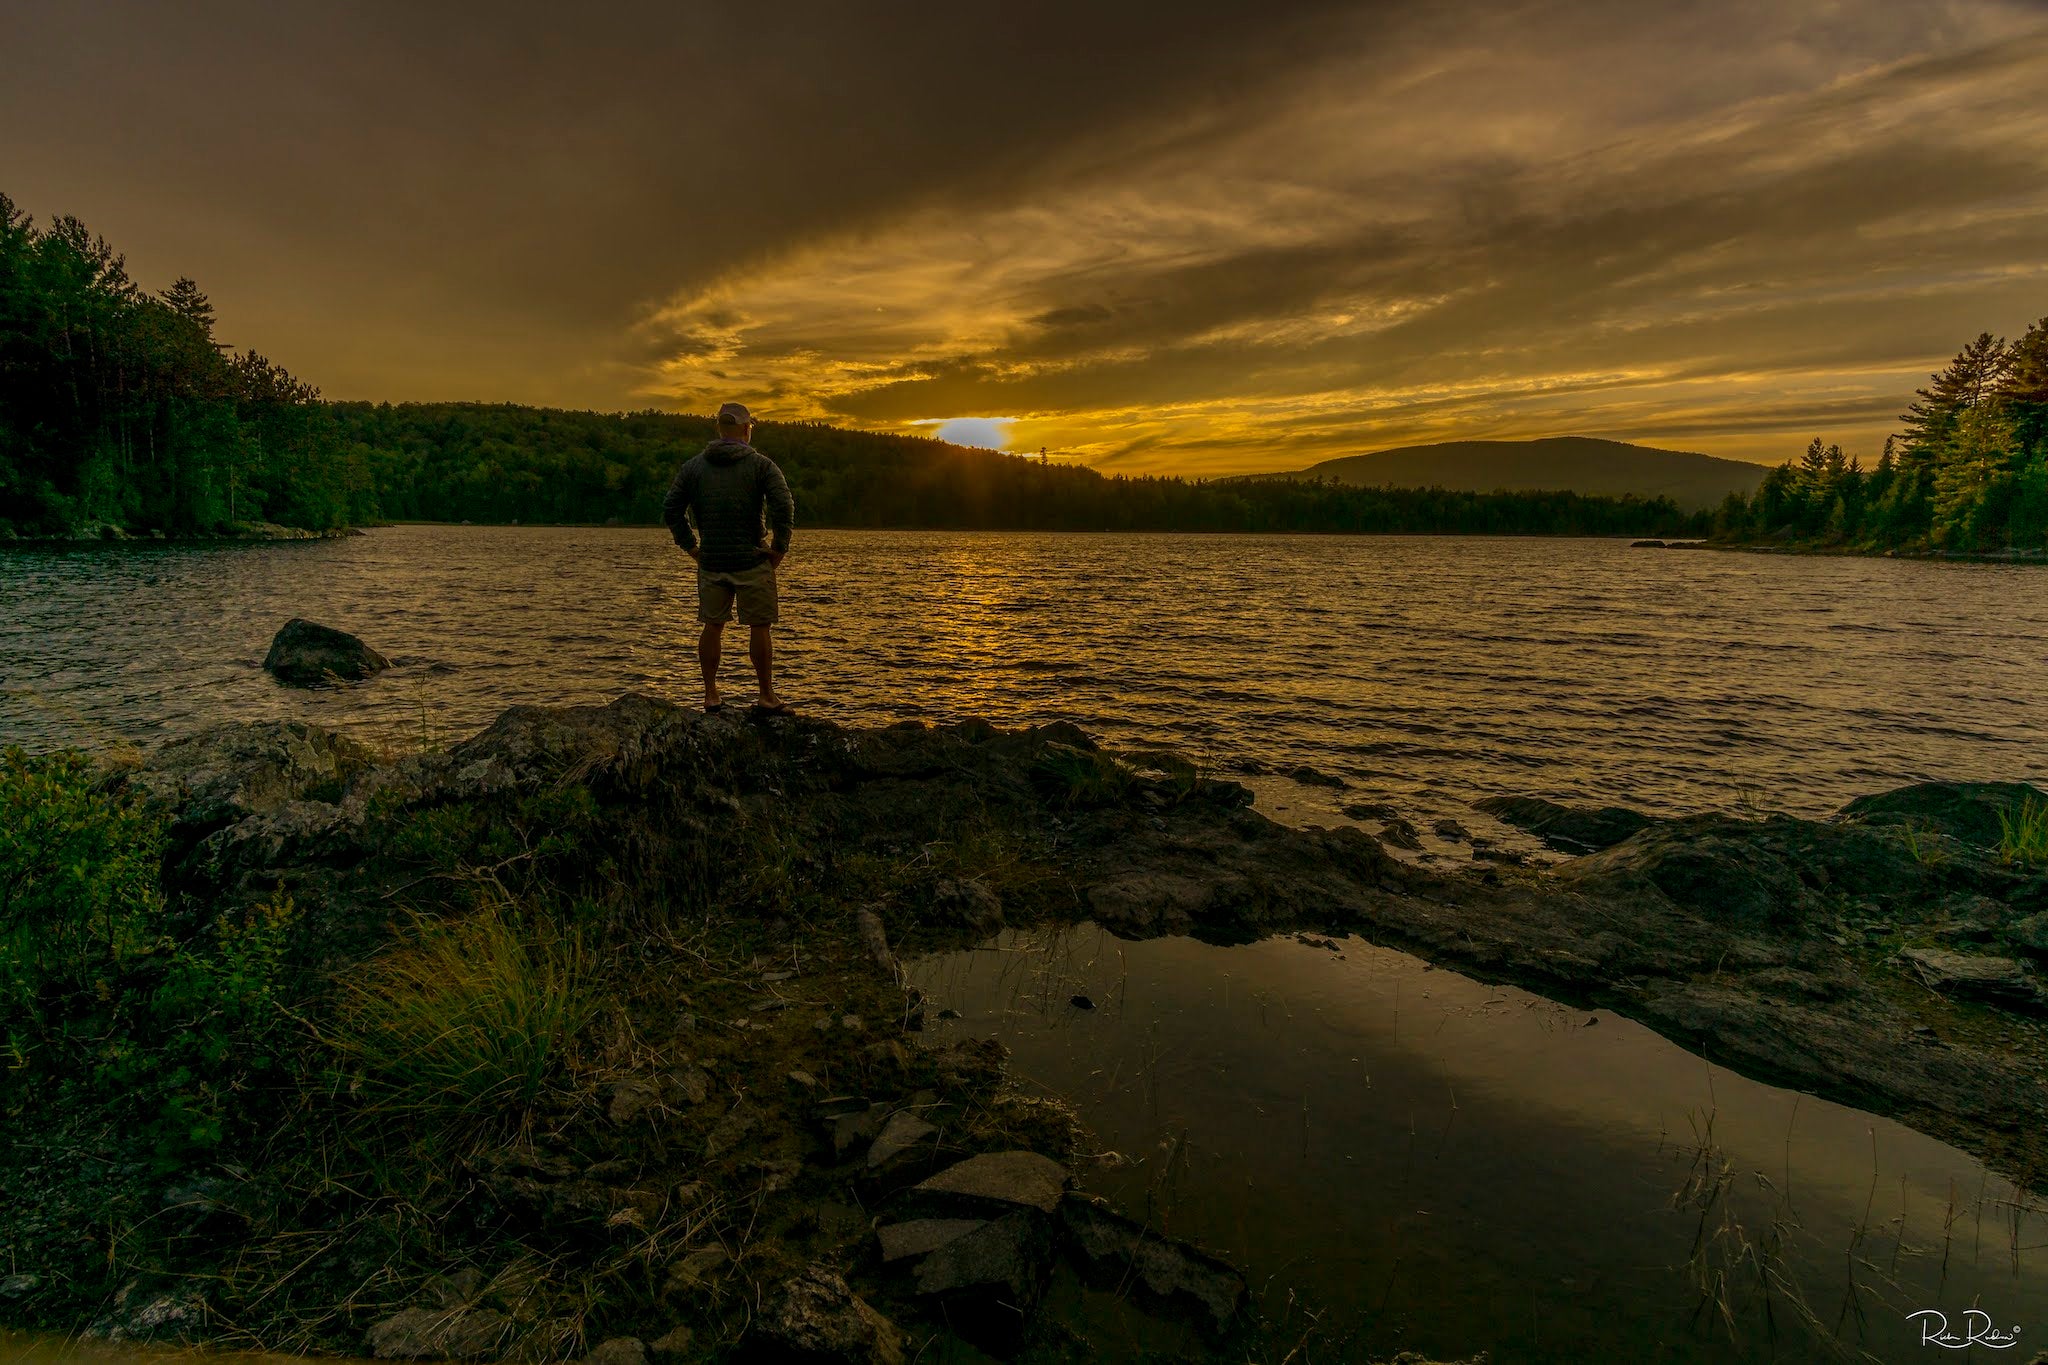 Man looks over a lake at sunrise